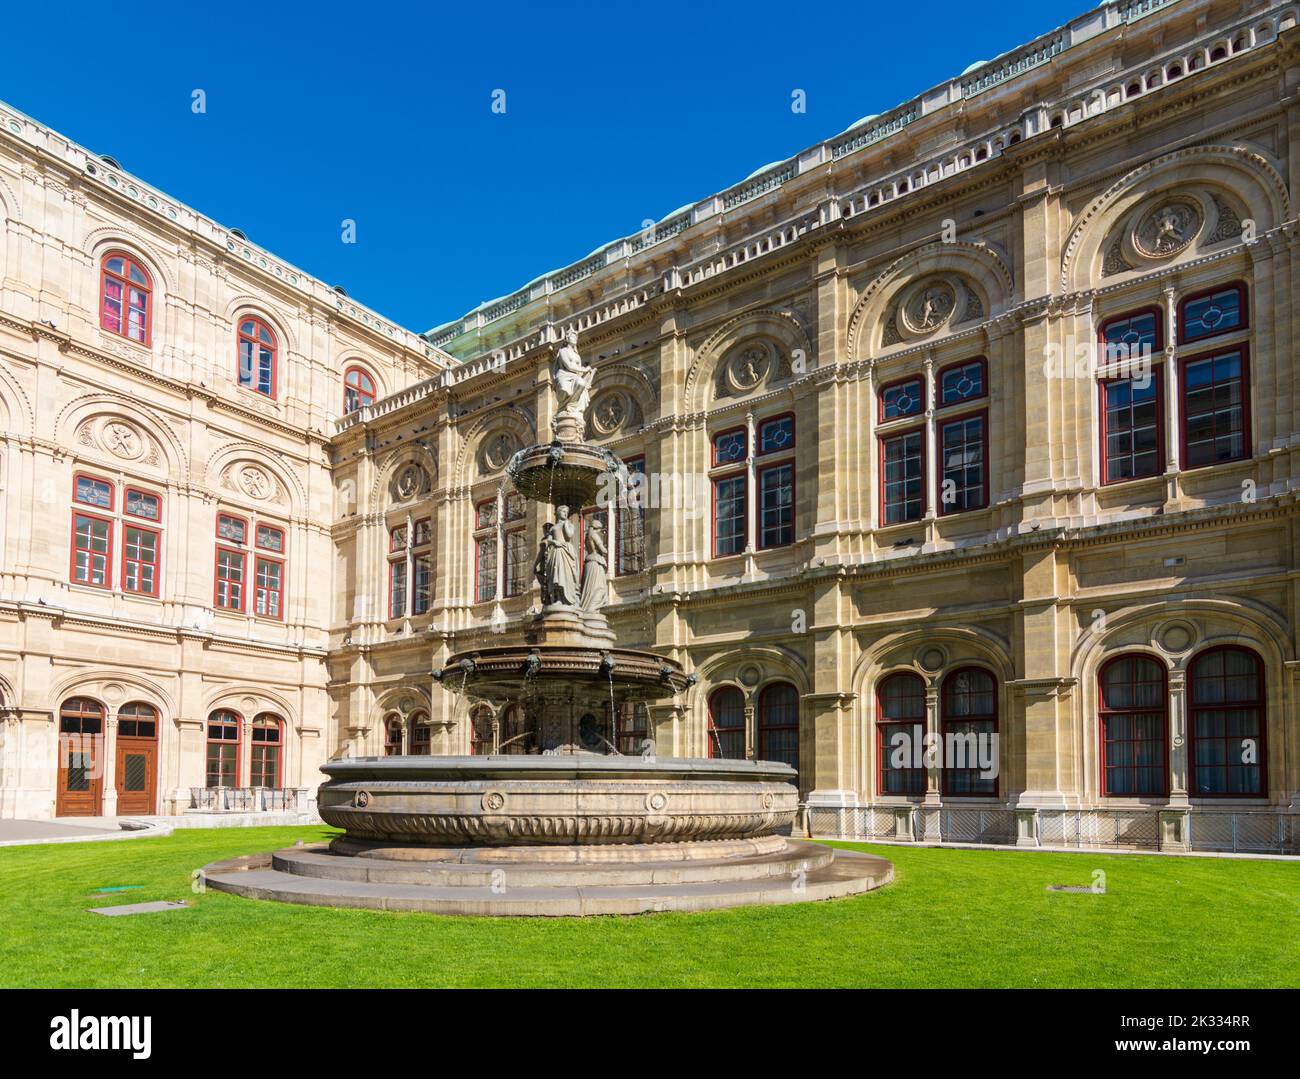 Wien, Vienna: fountain at Staatsoper (opera house) in 01. Old Town, Wien, Austria Stock Photo